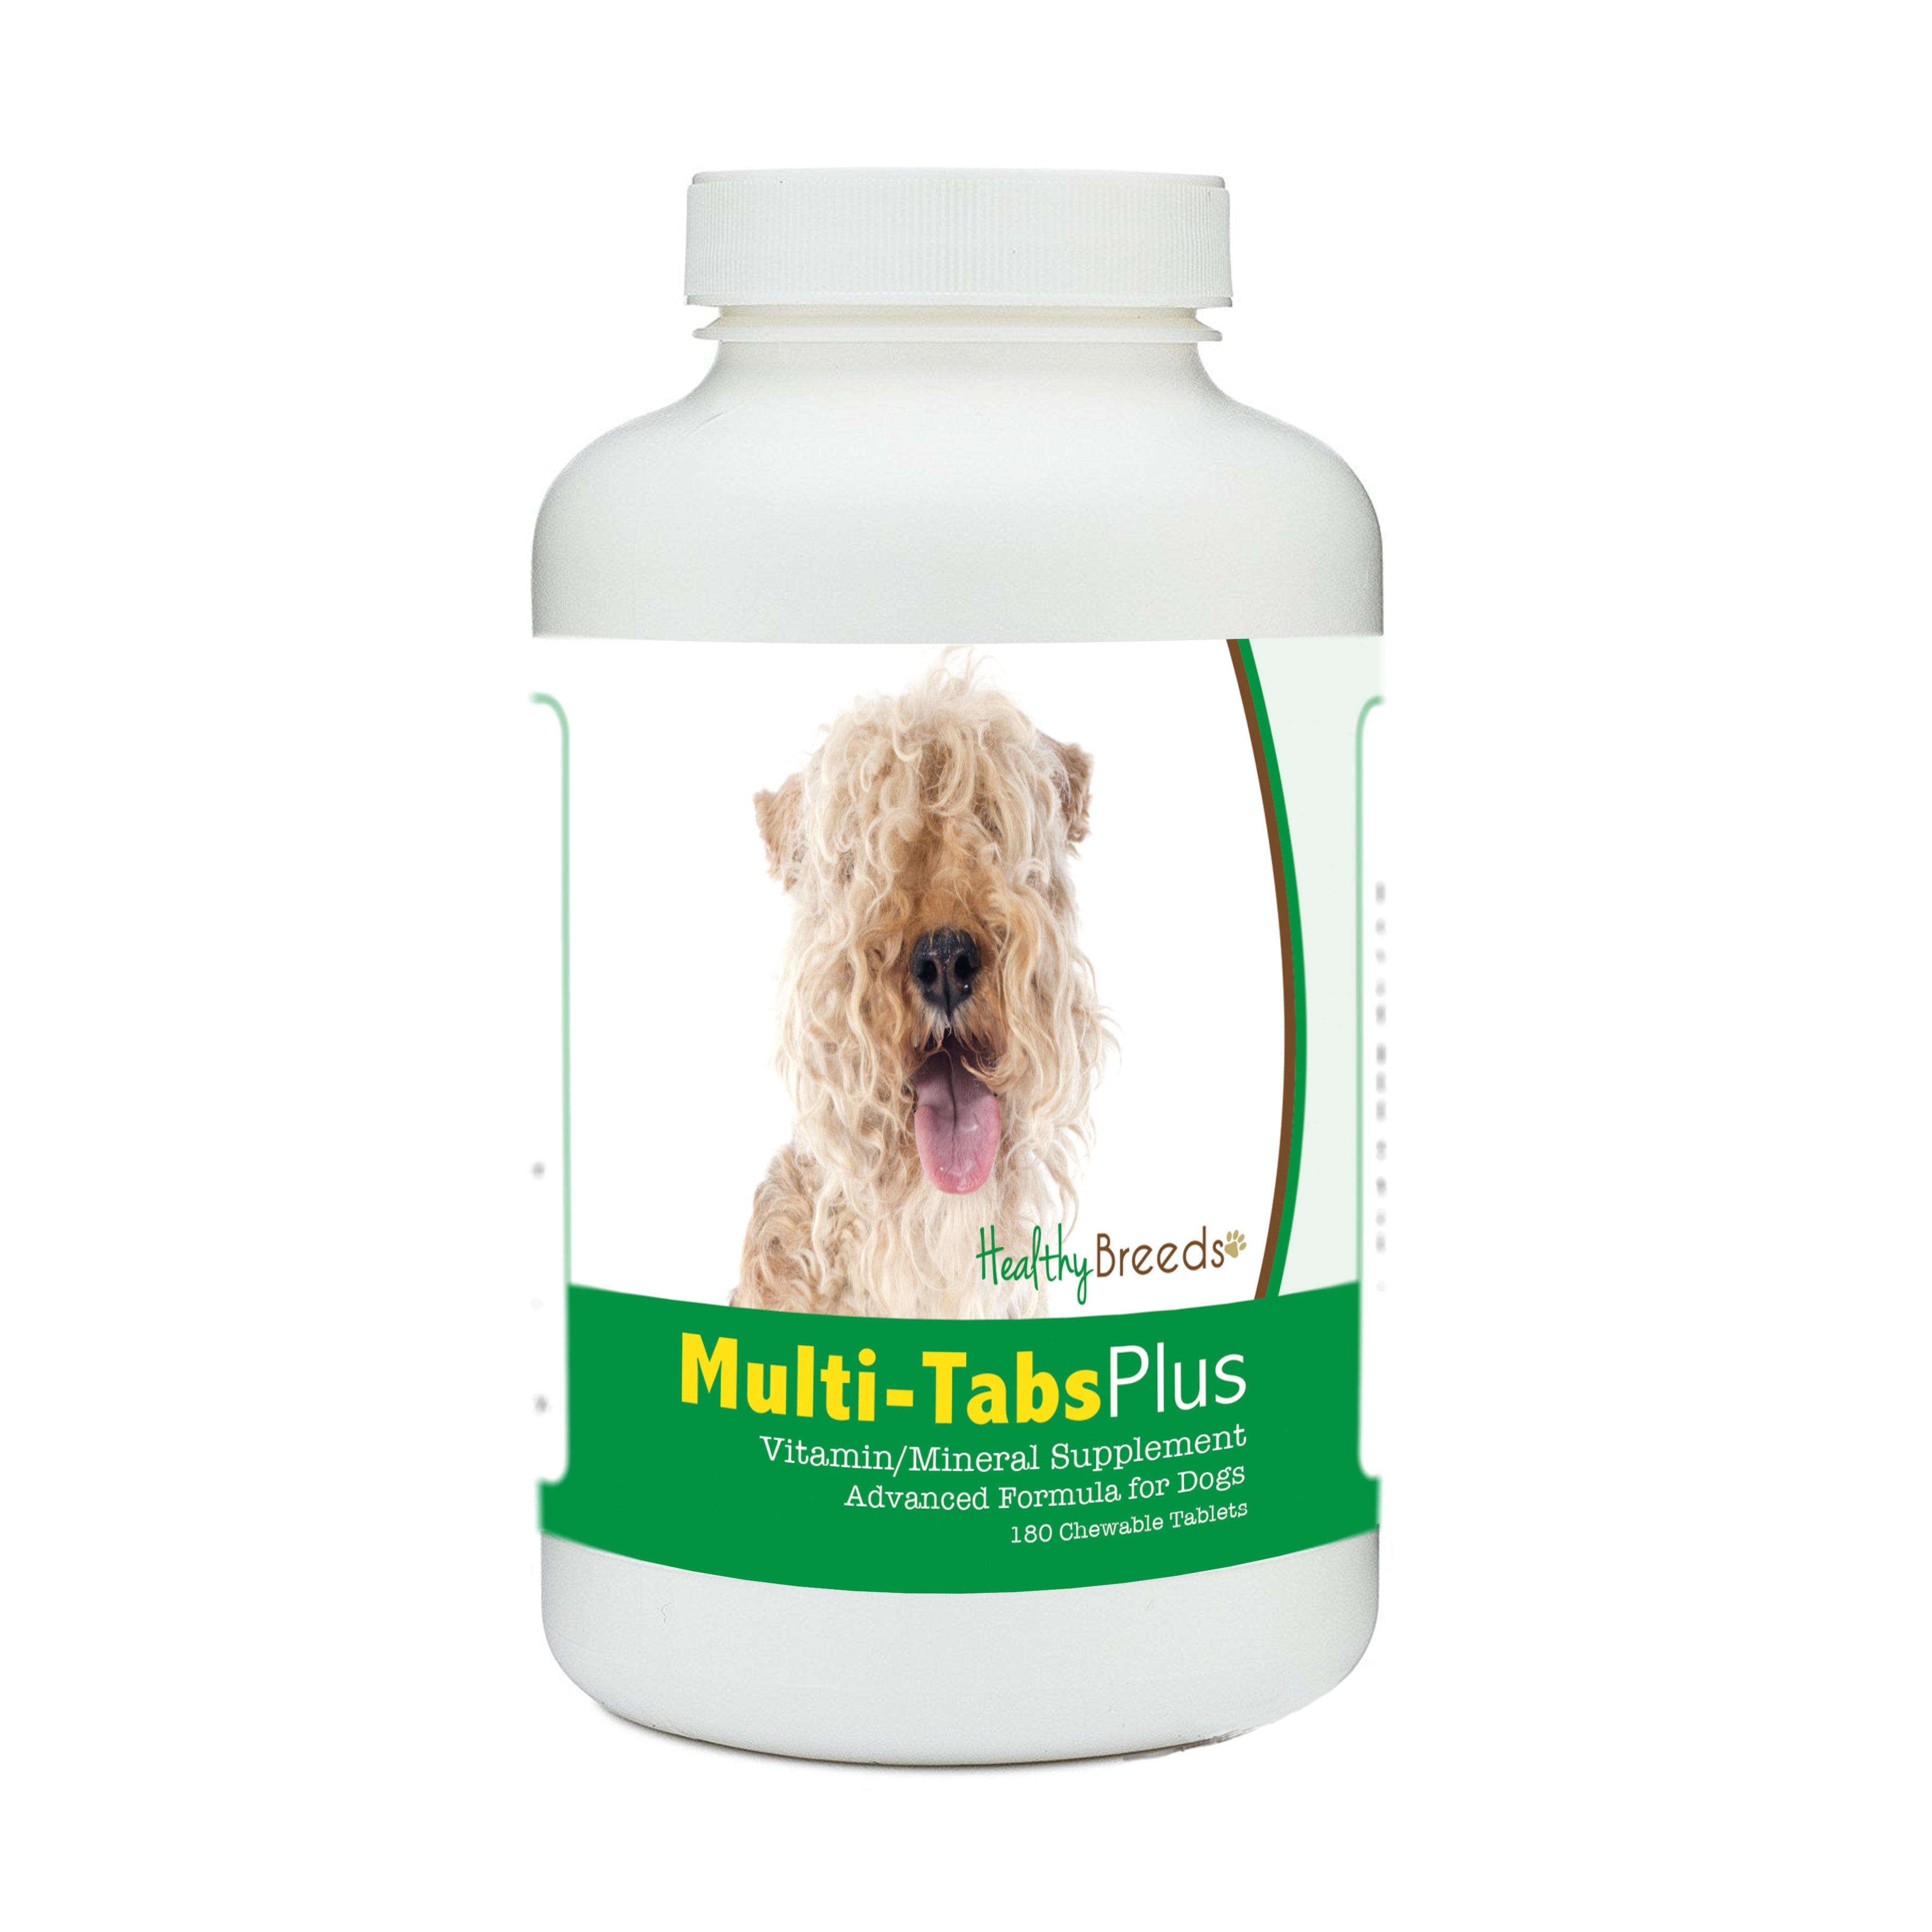 Lakeland Terrier Multi-Tabs Plus Chewable Tablets 180 Count